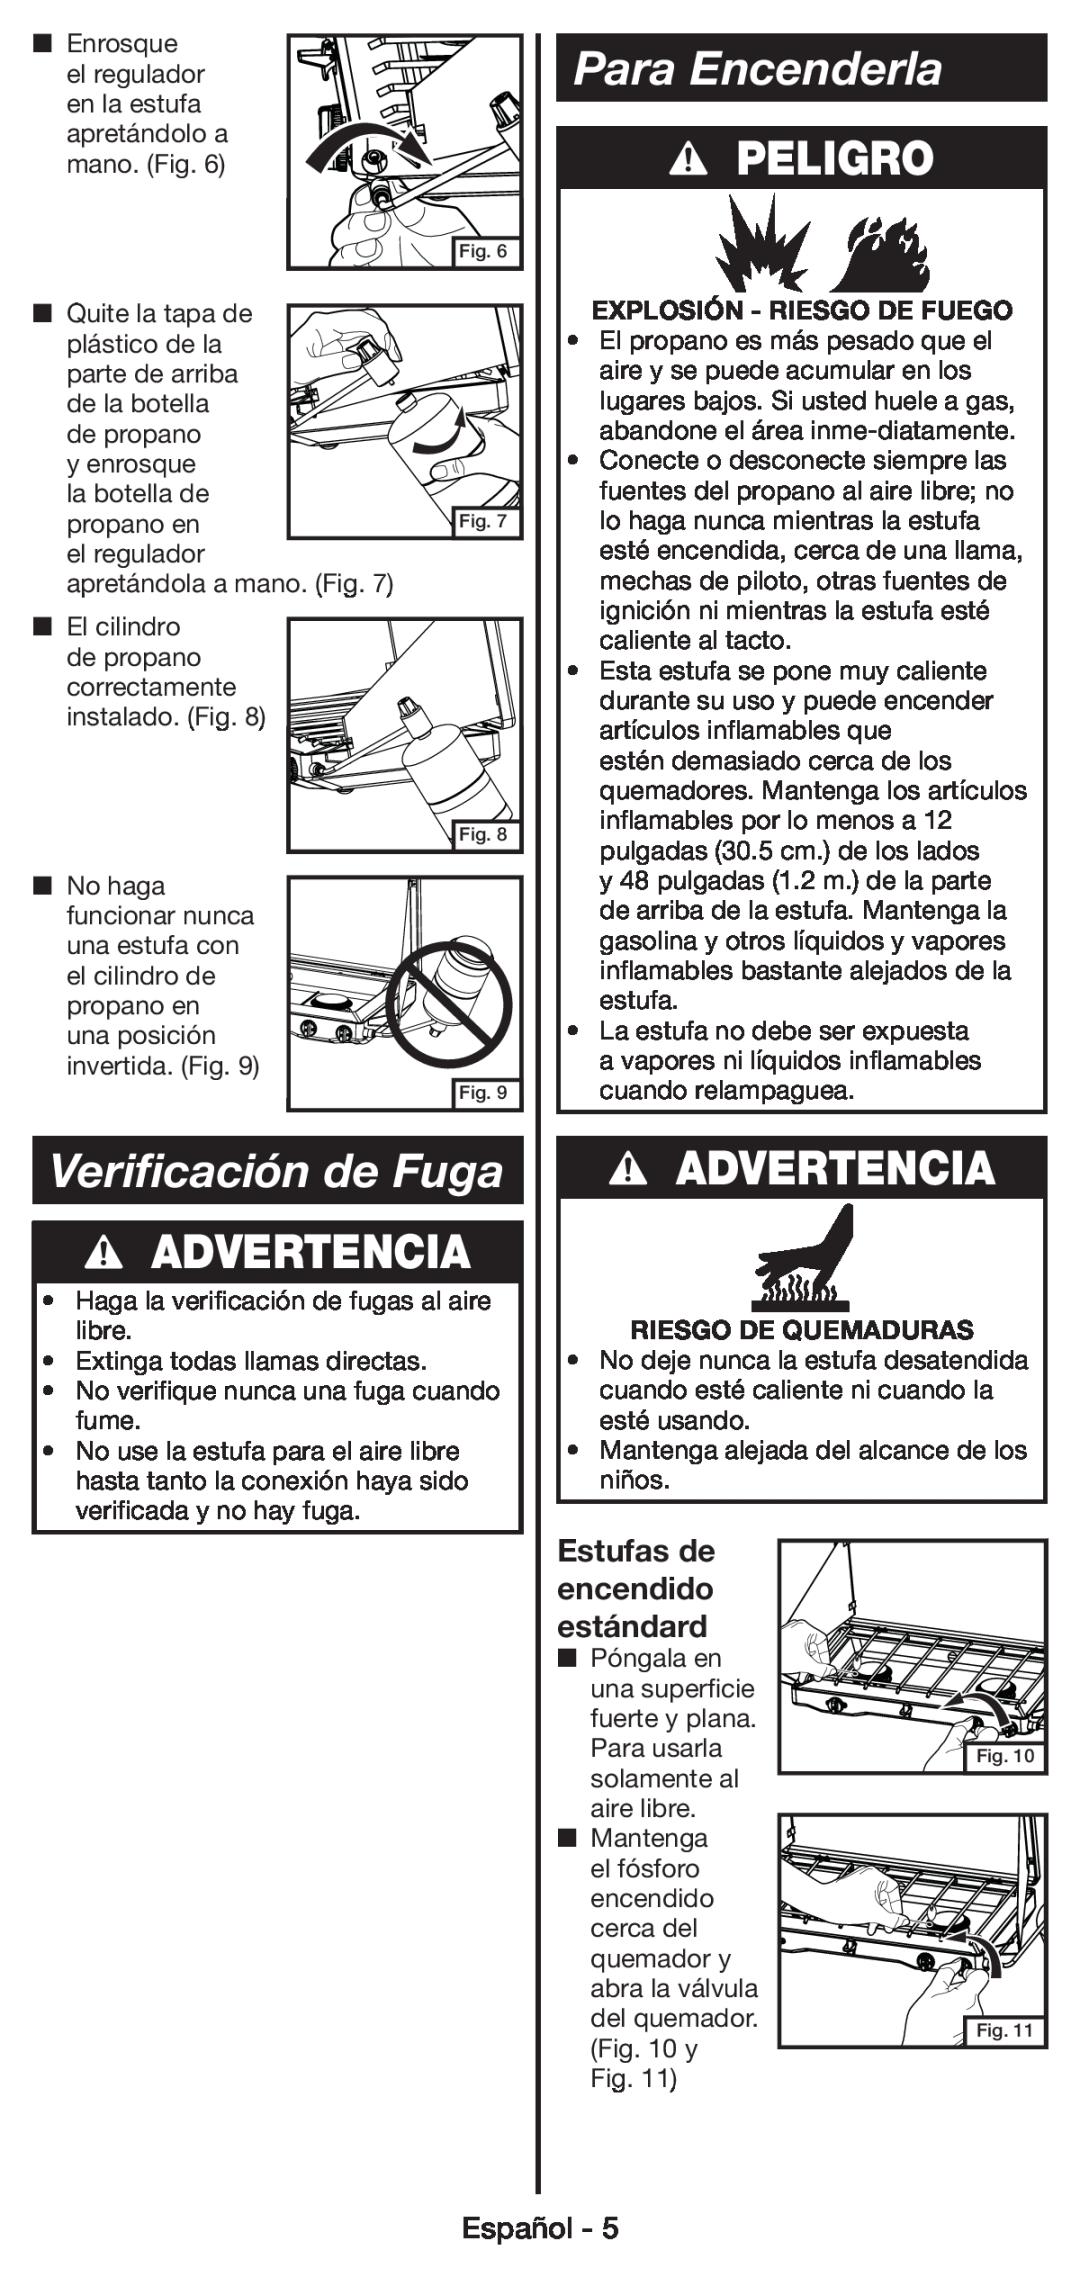 Coleman 5430E manual Verificación de Fuga, Para Encenderla, Estufas de, encendido, estándard, Advertencia, Peligro, Español 